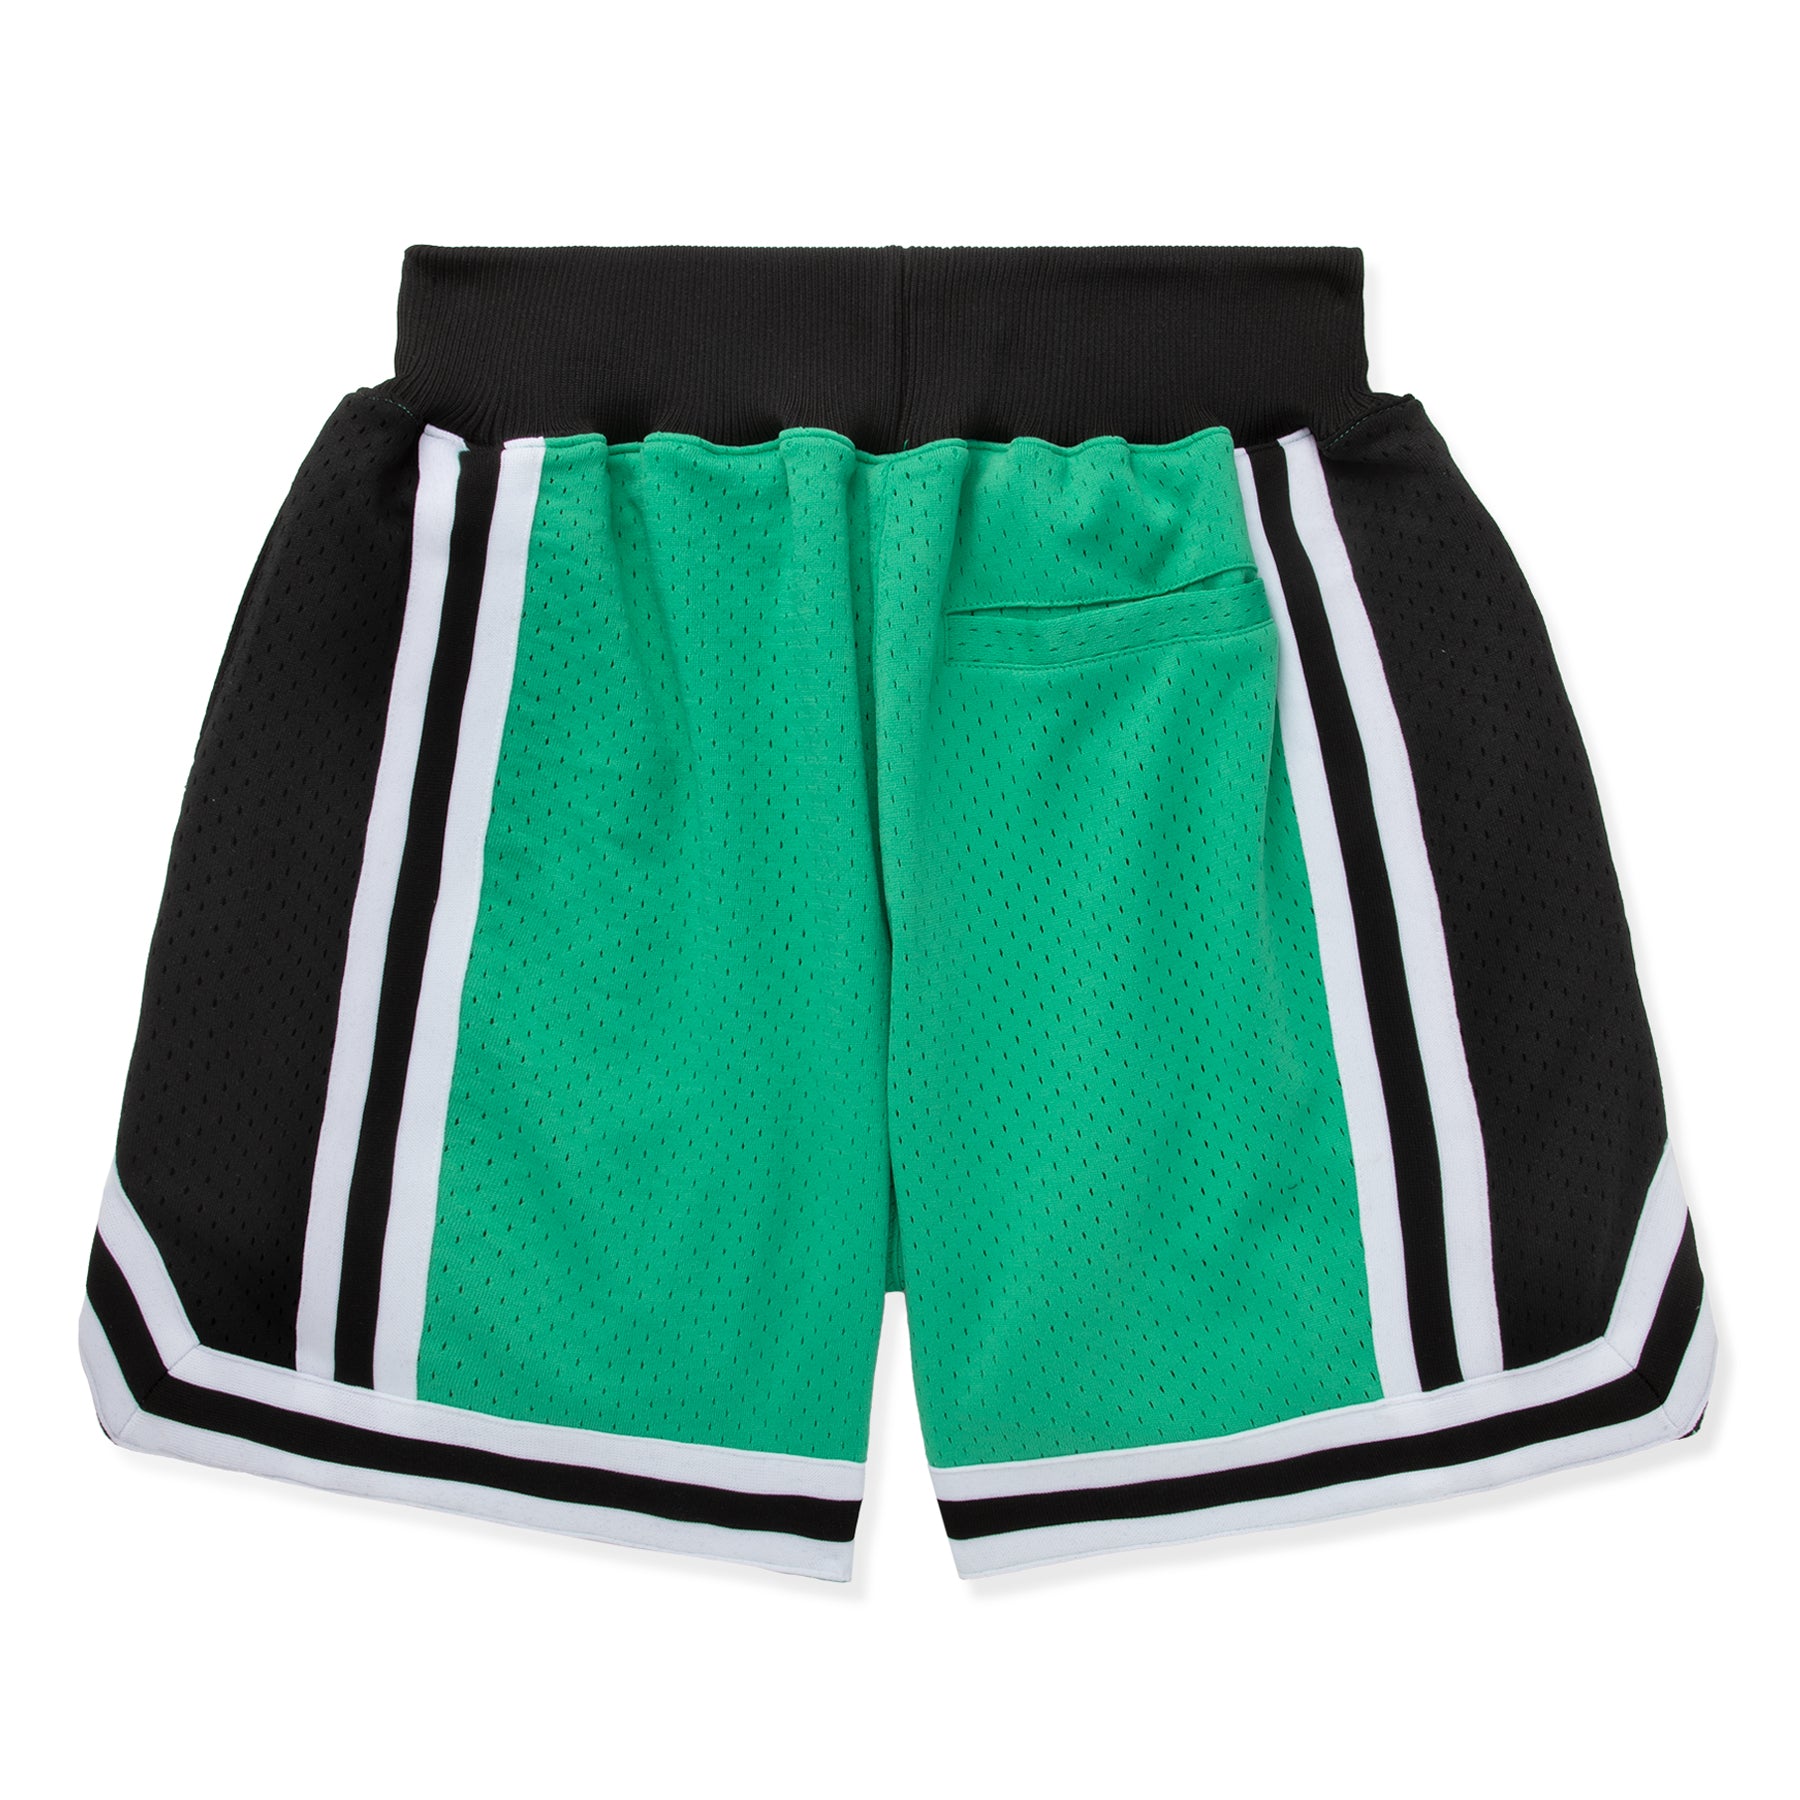 Concepts Basketball Short (Green/Black)